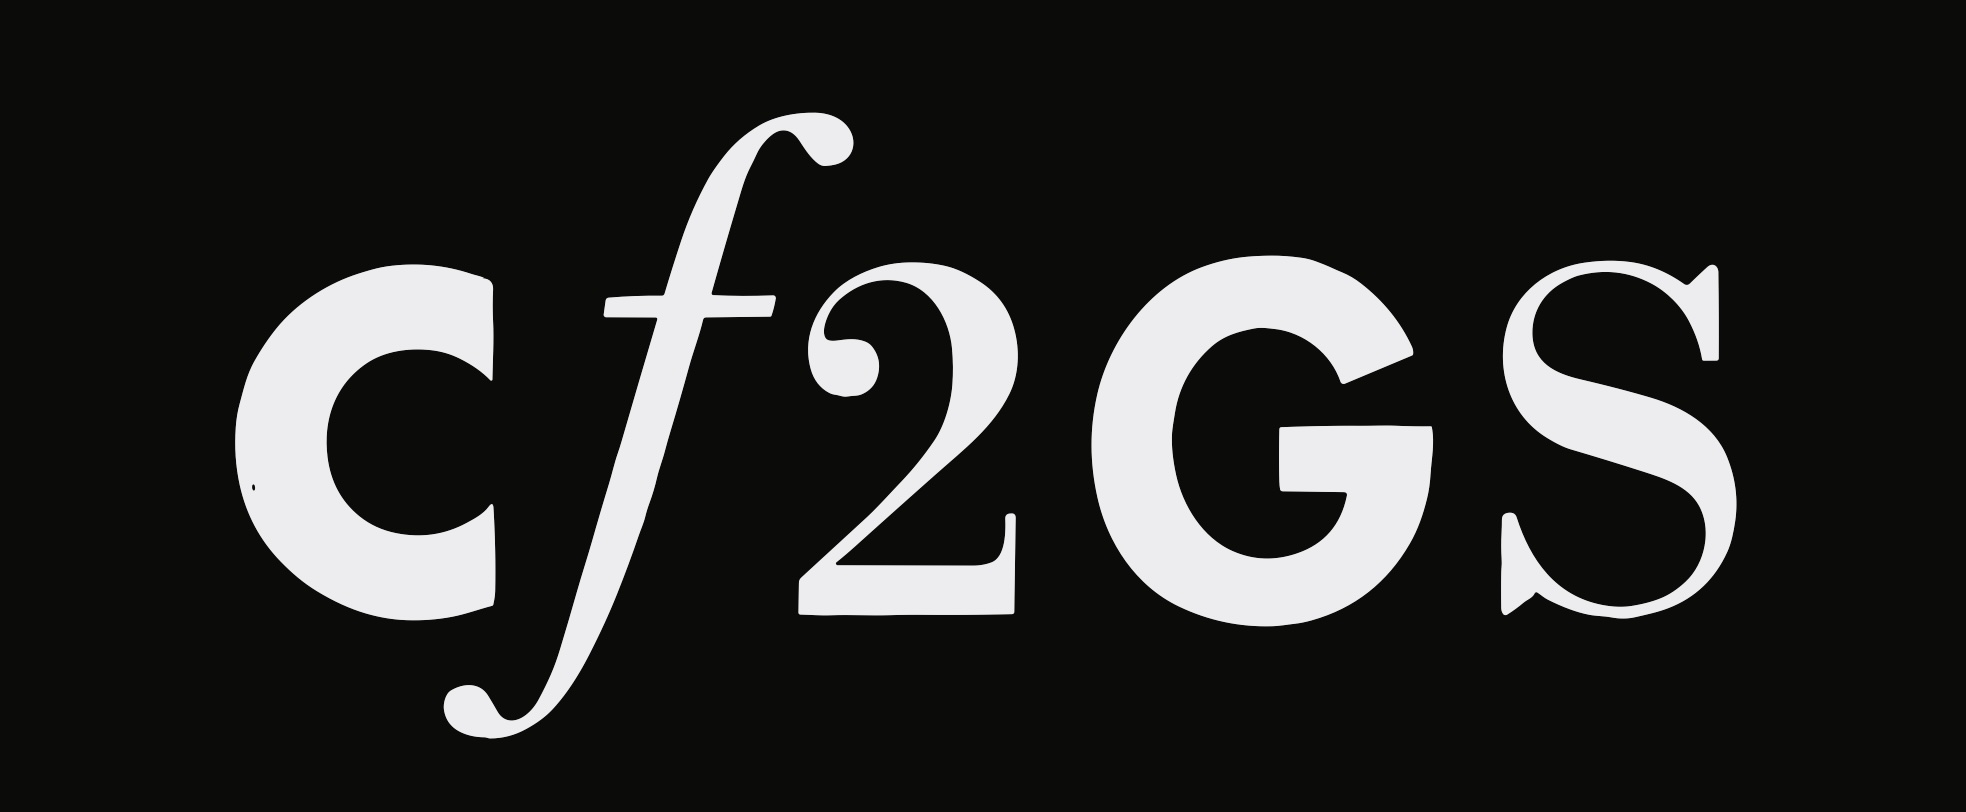 cf2gs logo